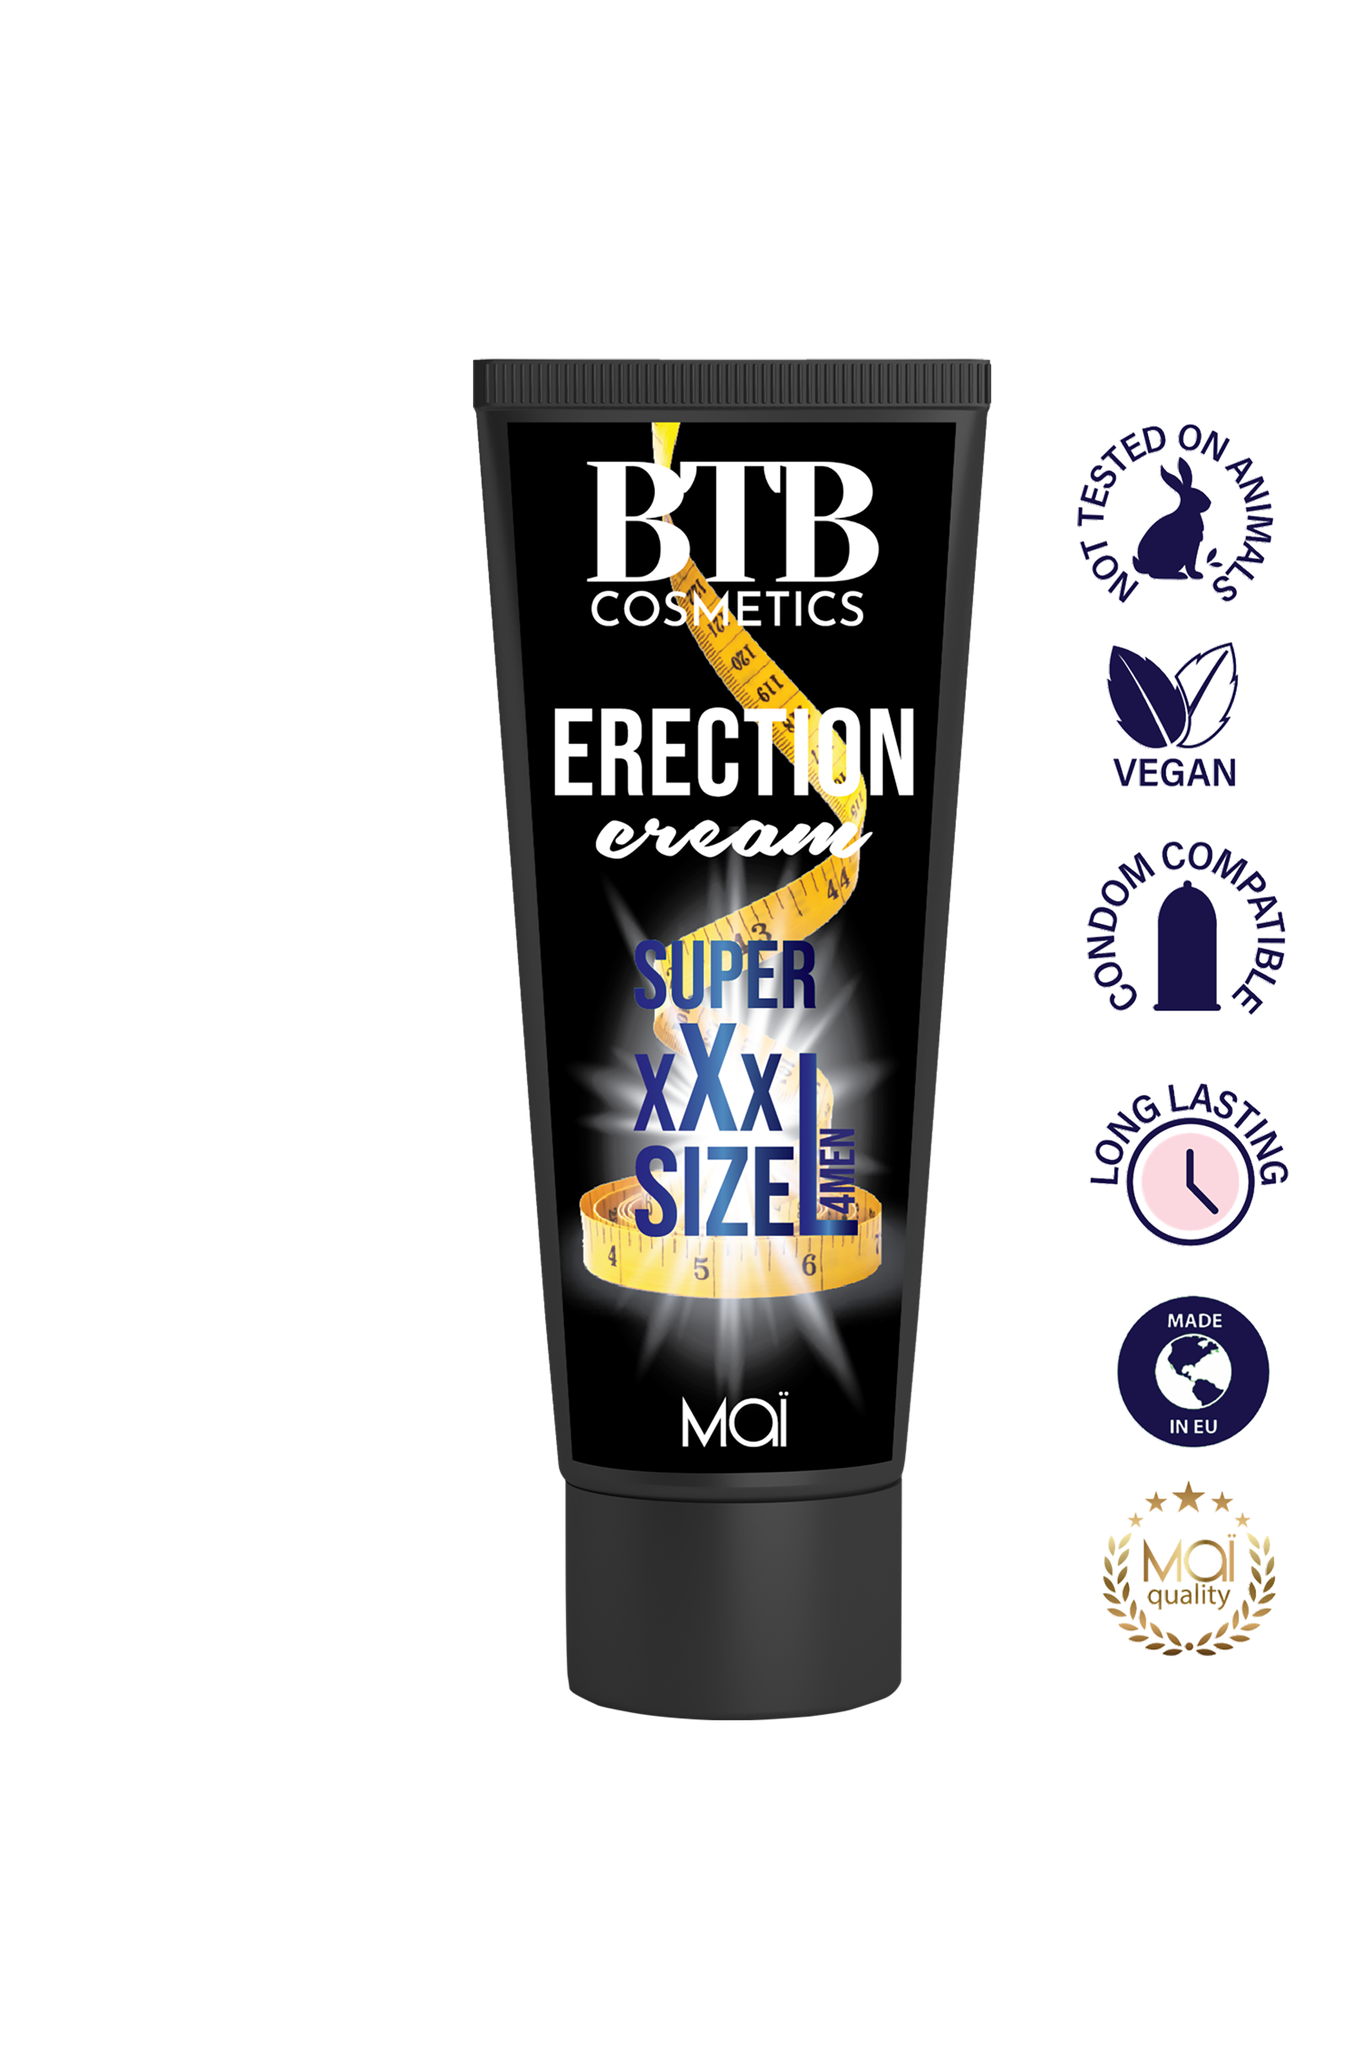 Back To Basics xXxL Erection cream